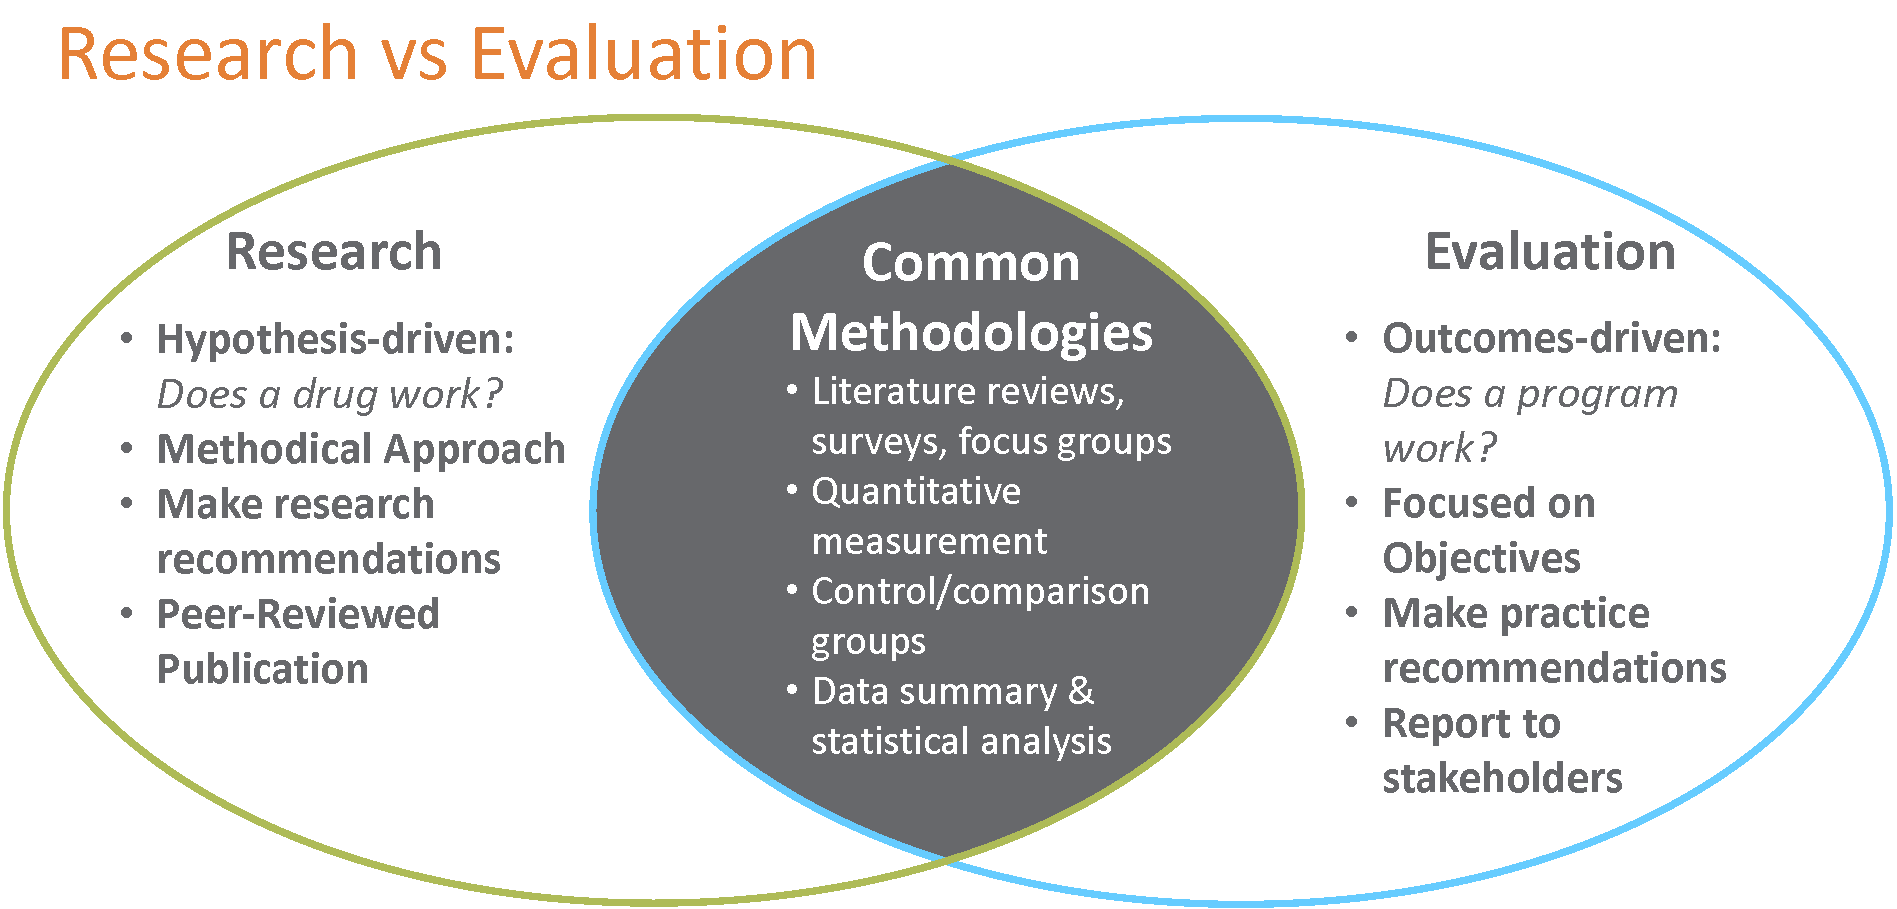 program evaluation research definition